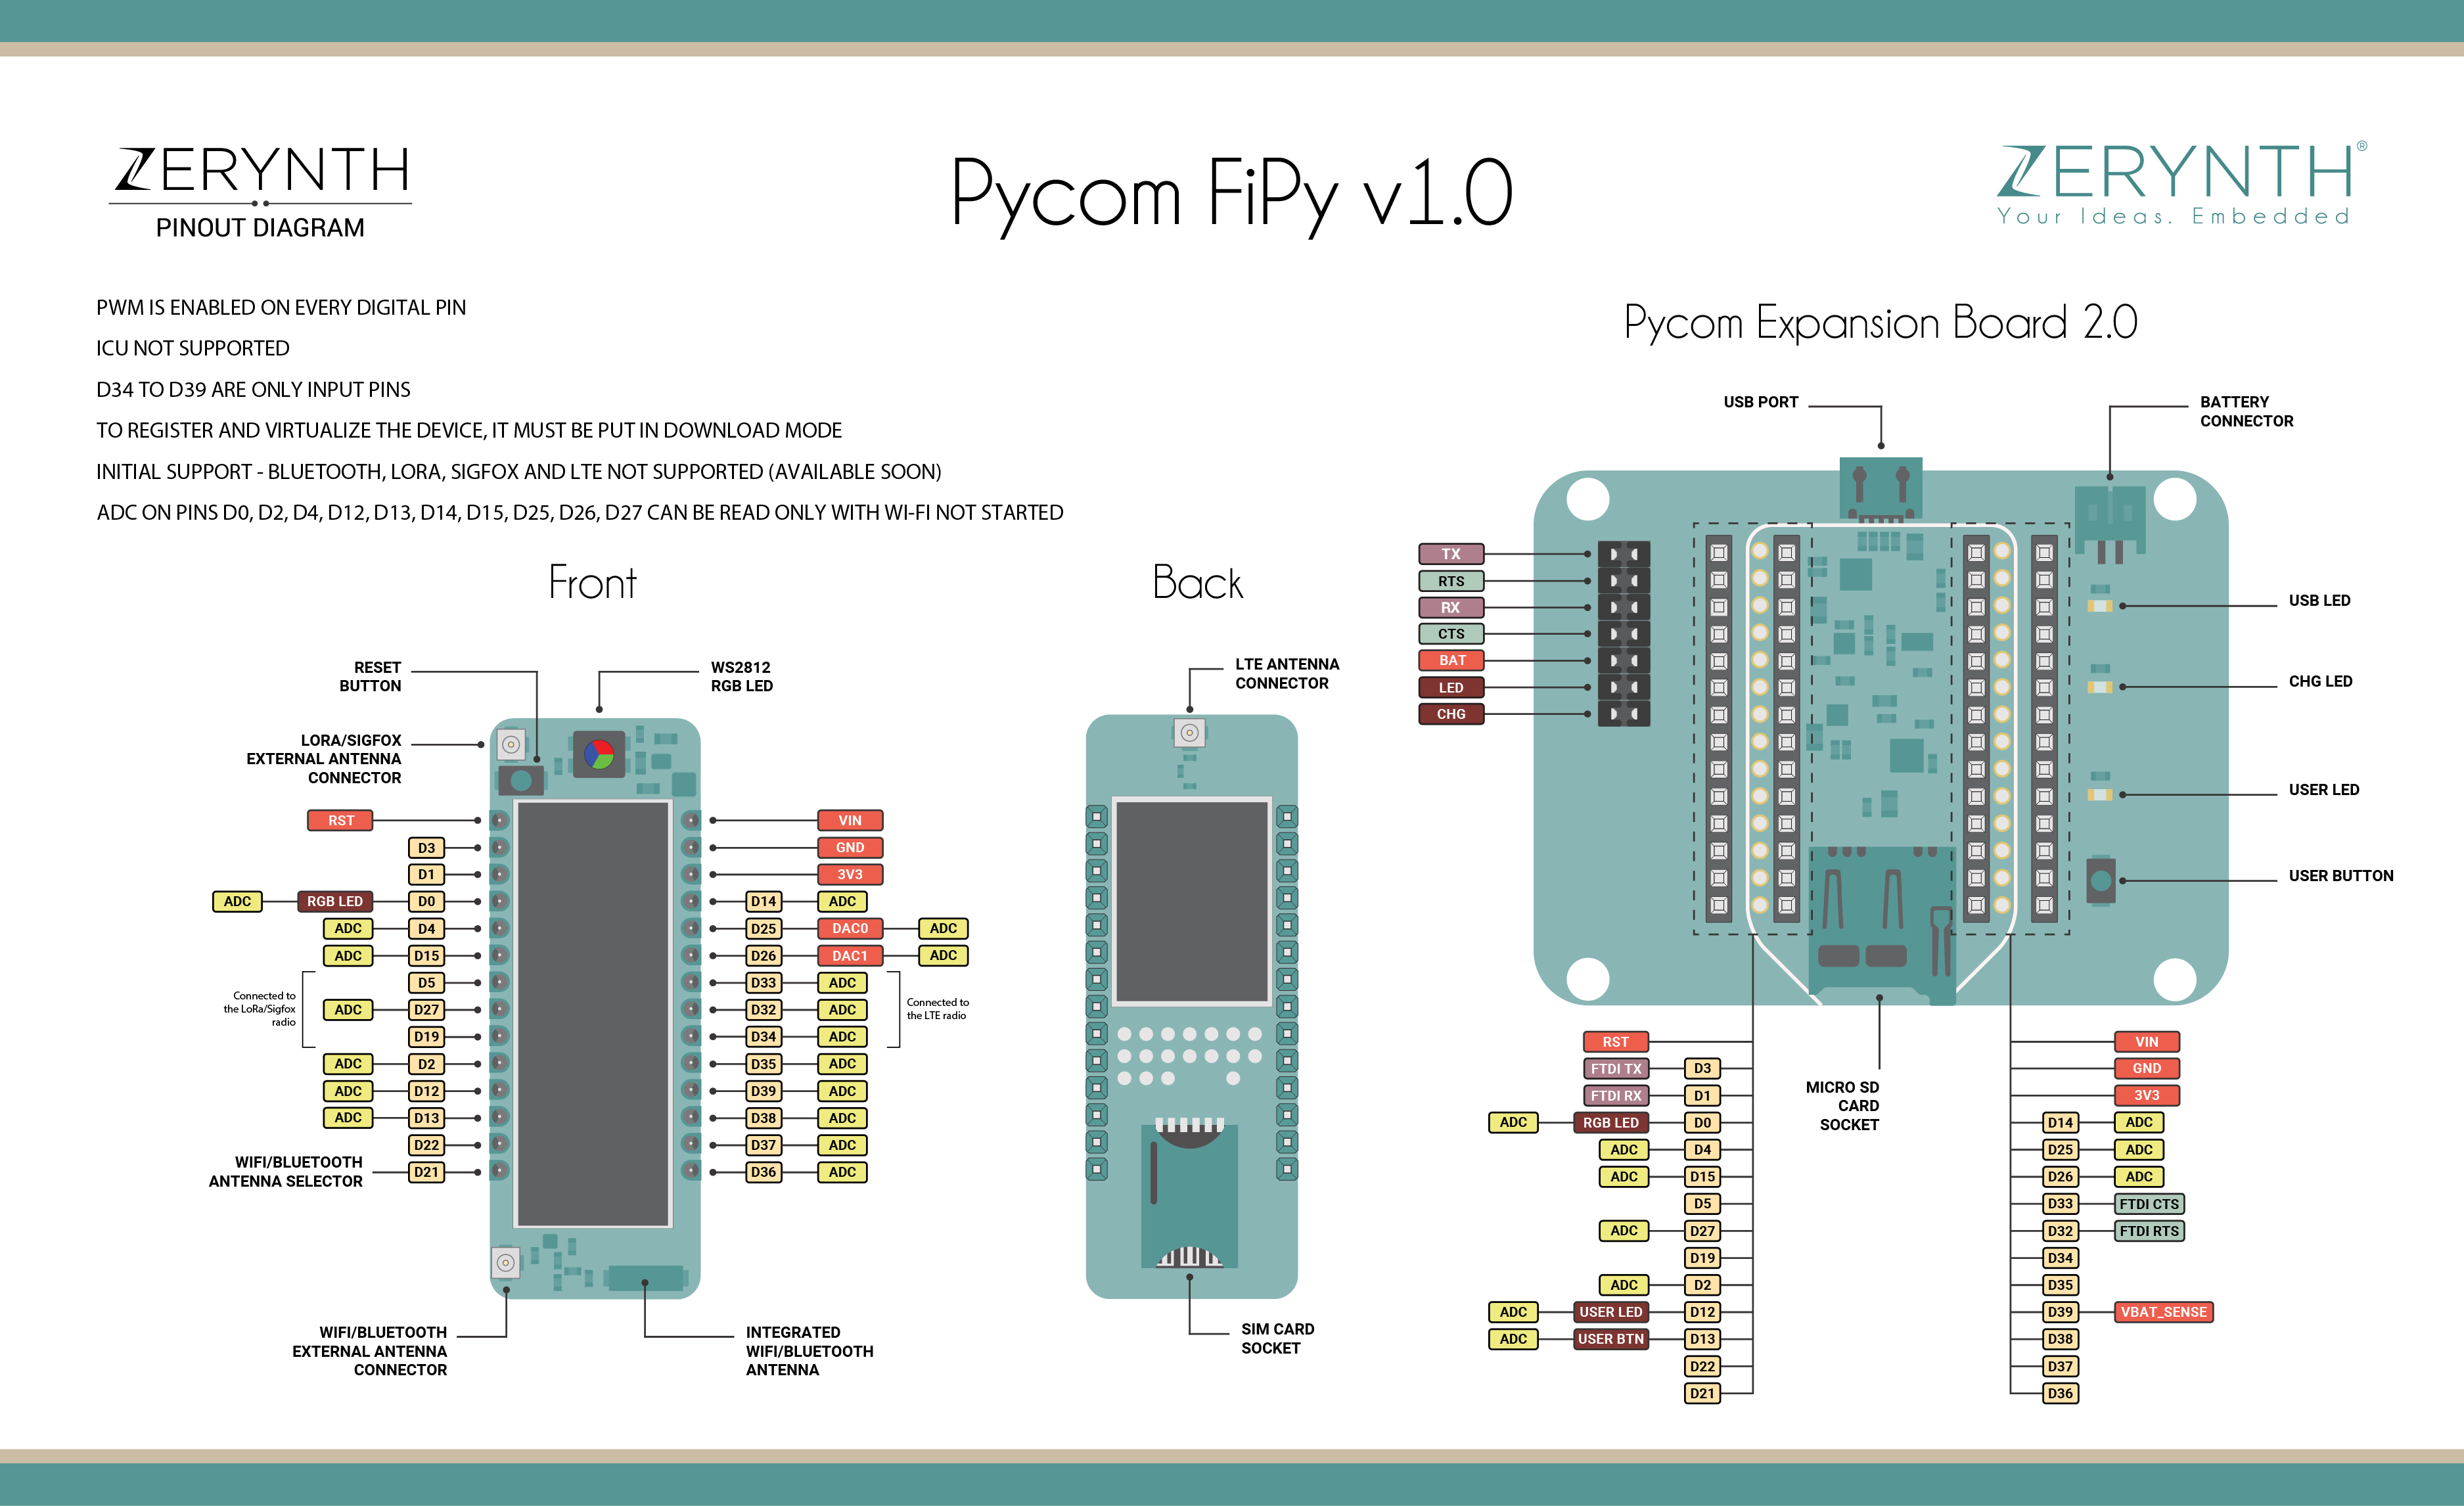 Pycom Fipy 1.0